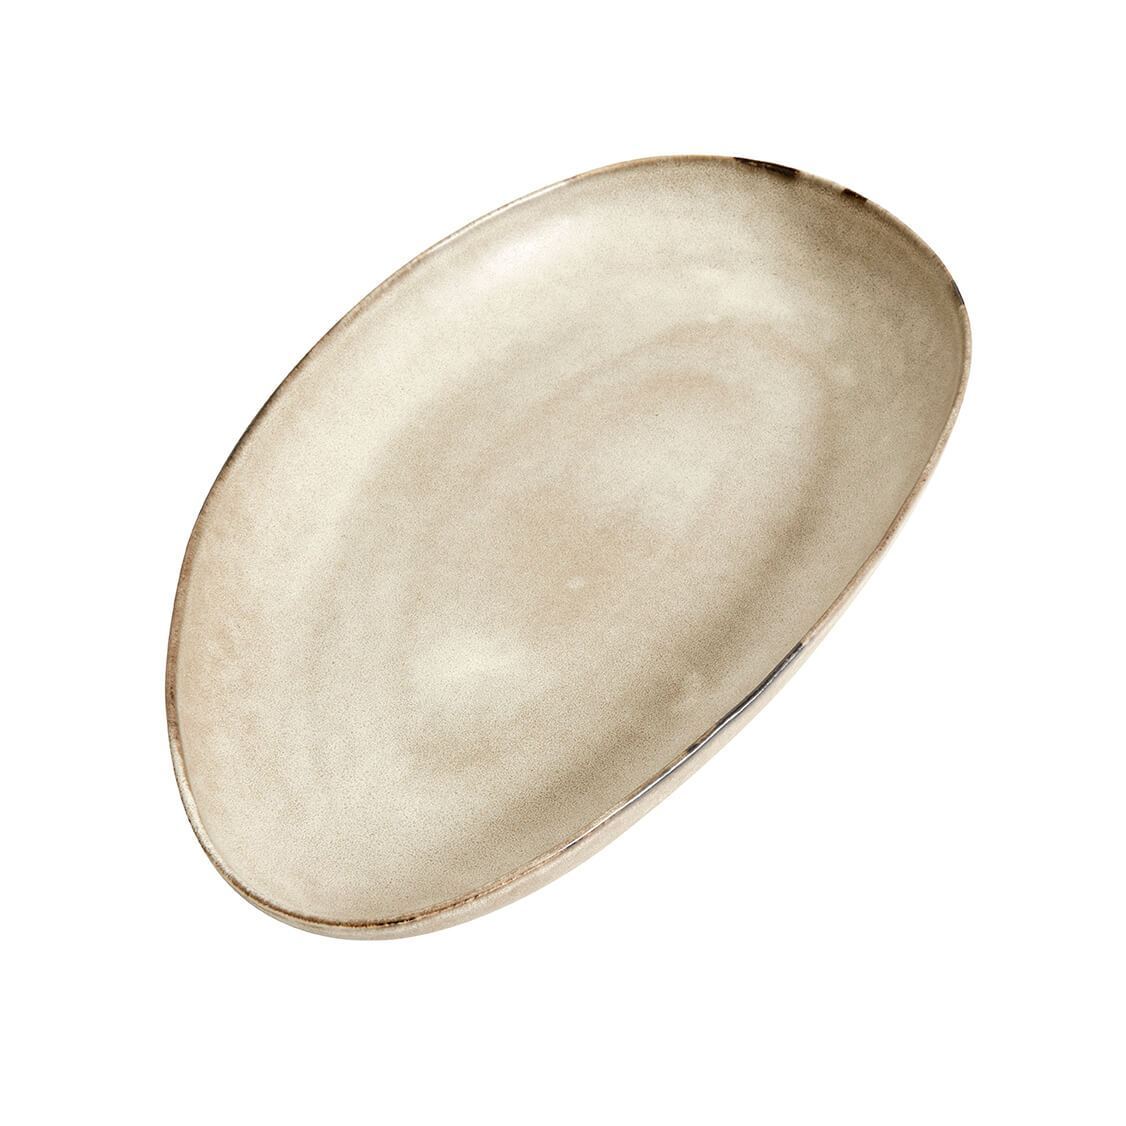 Muubs Mame Servierplatte Oval Auster, 43cm